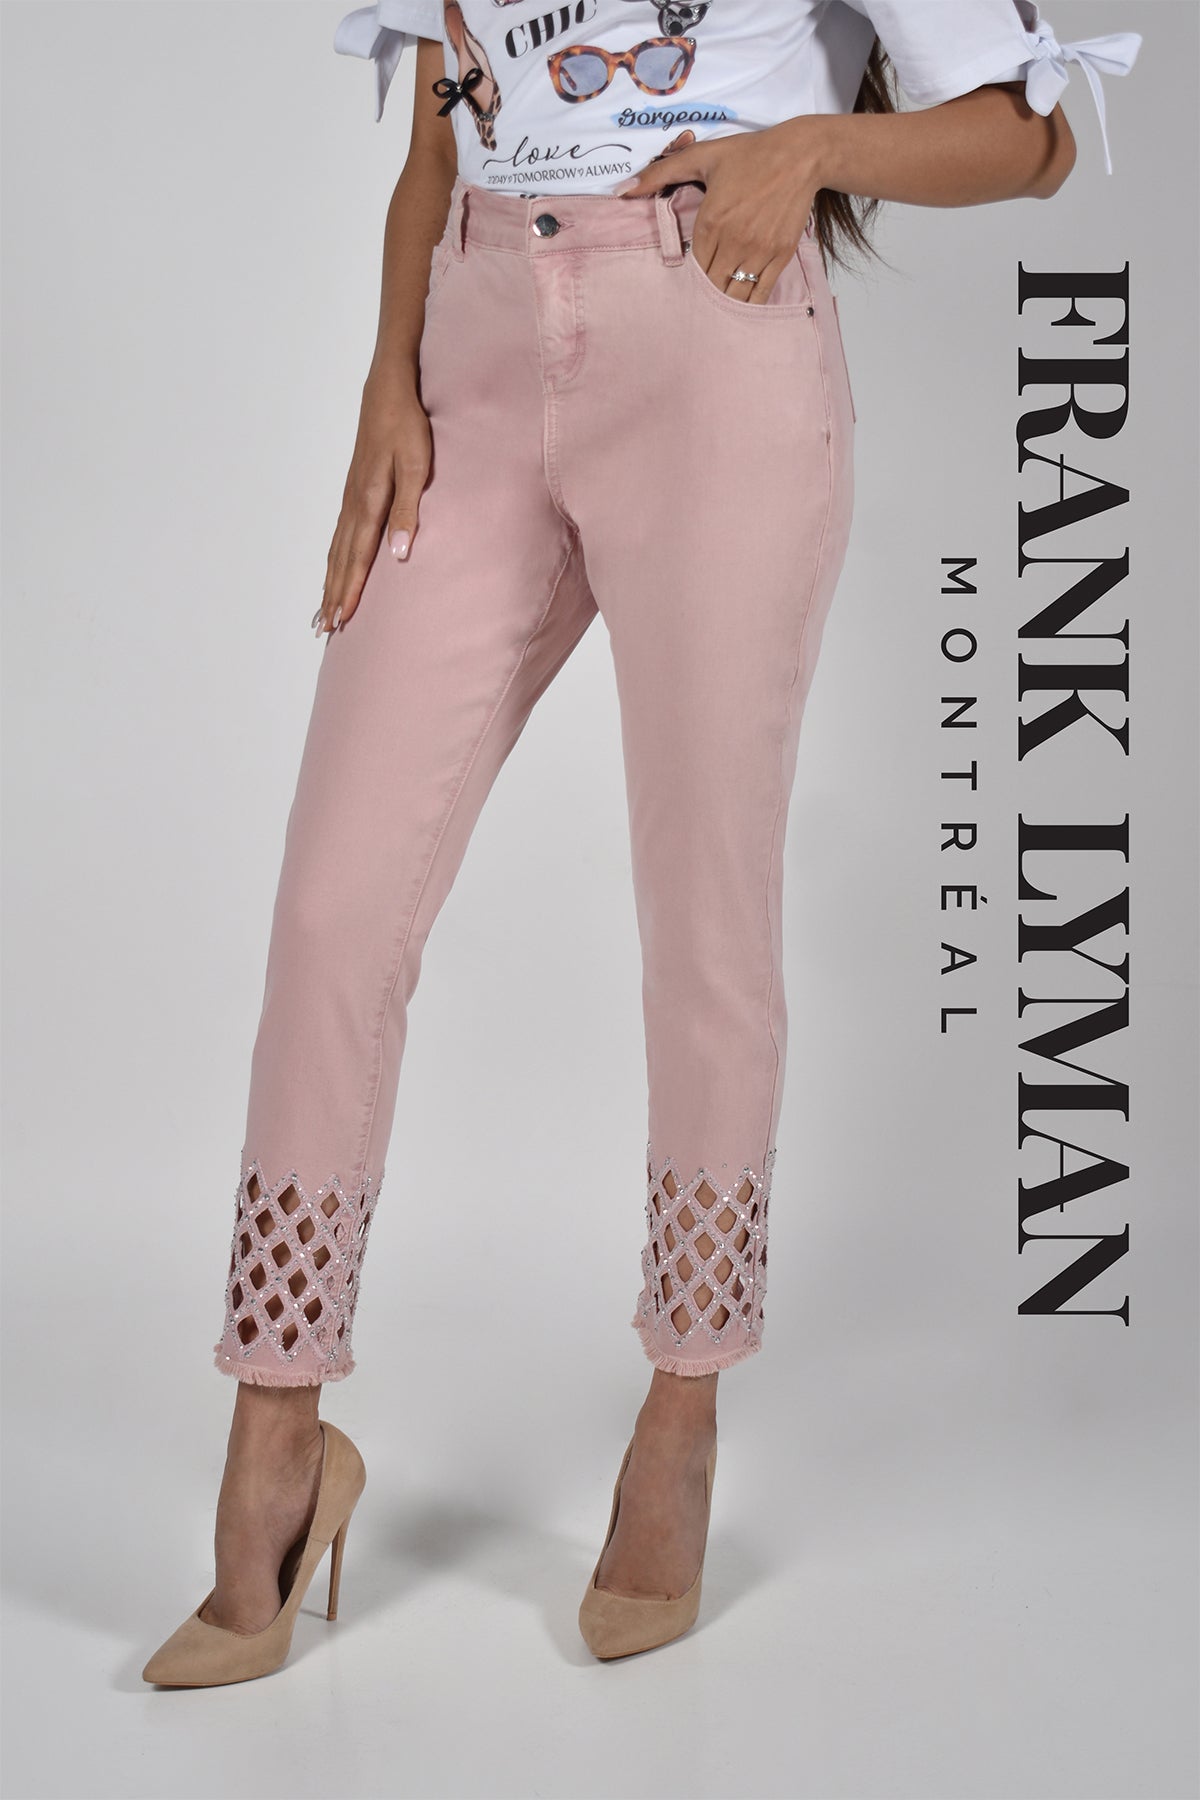 Frank Lyman Montreal Jeans-Buy Frank Lyman Montreal Jeans Online-Frank Lyman Design Jeans-Frank Lyman Montreal Spring 2022 Collection-Frank Lyman Montreal Pink Jeans